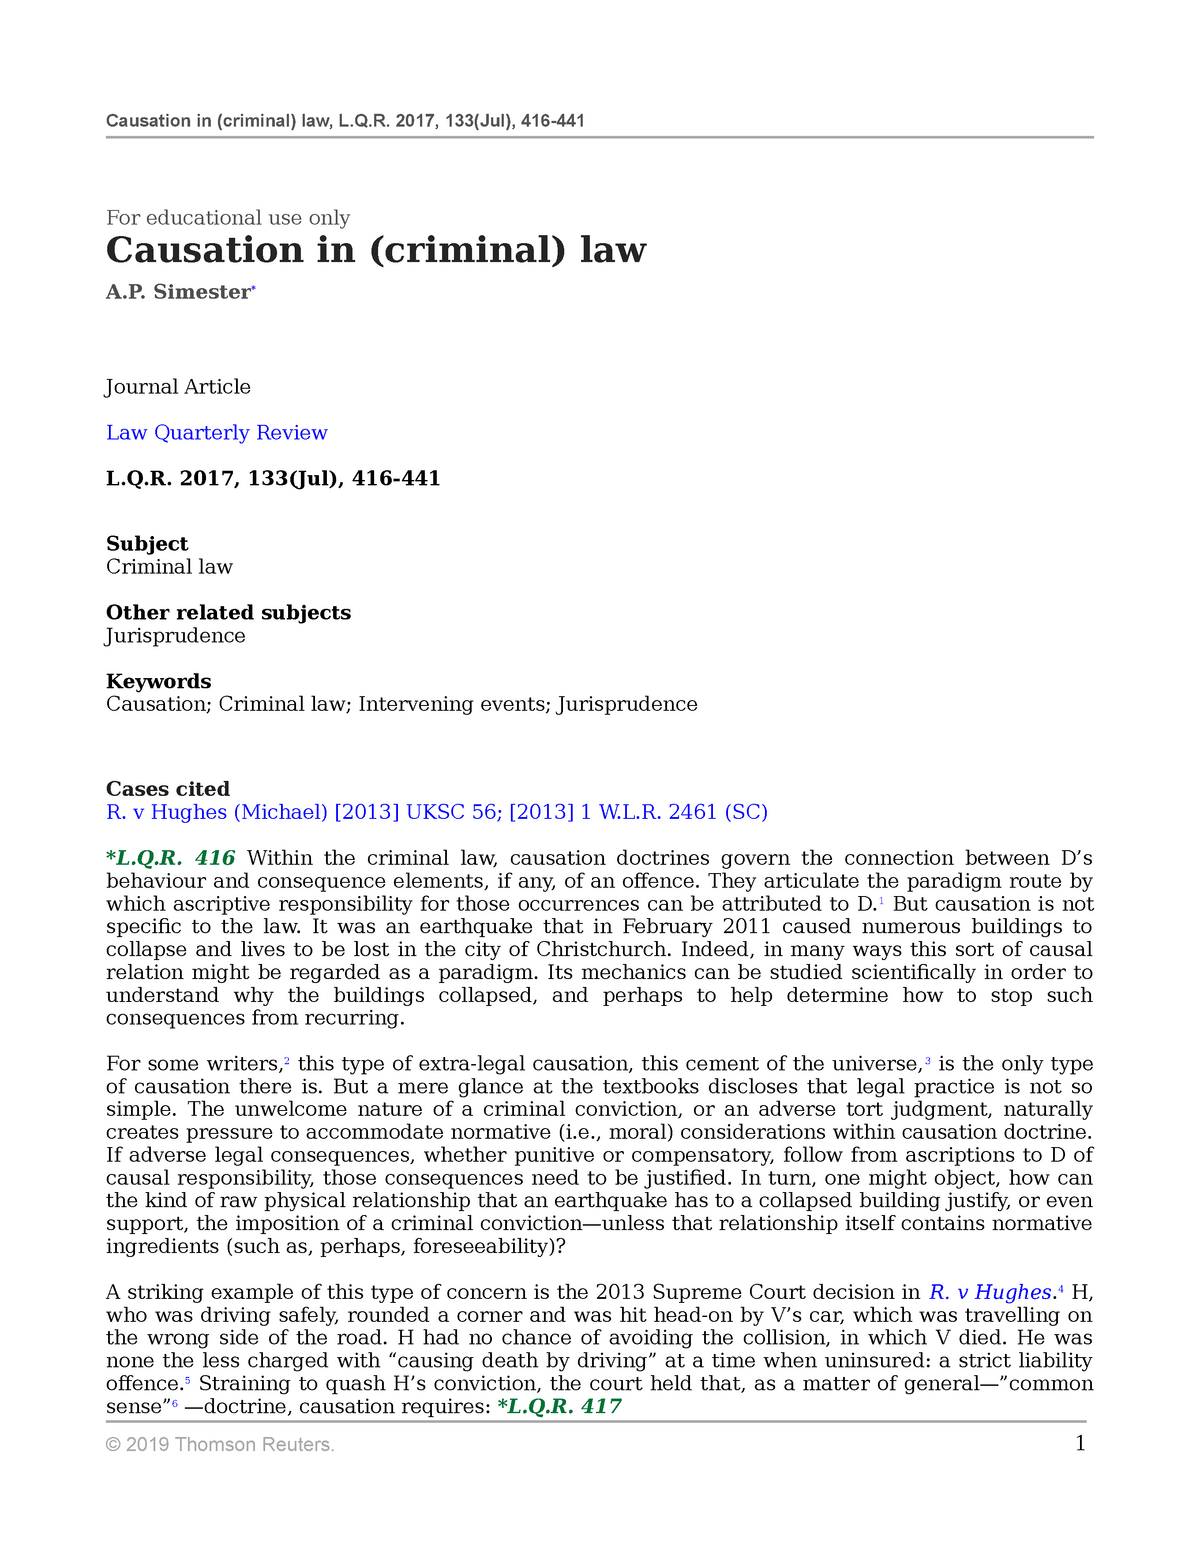 essay on causation criminal law